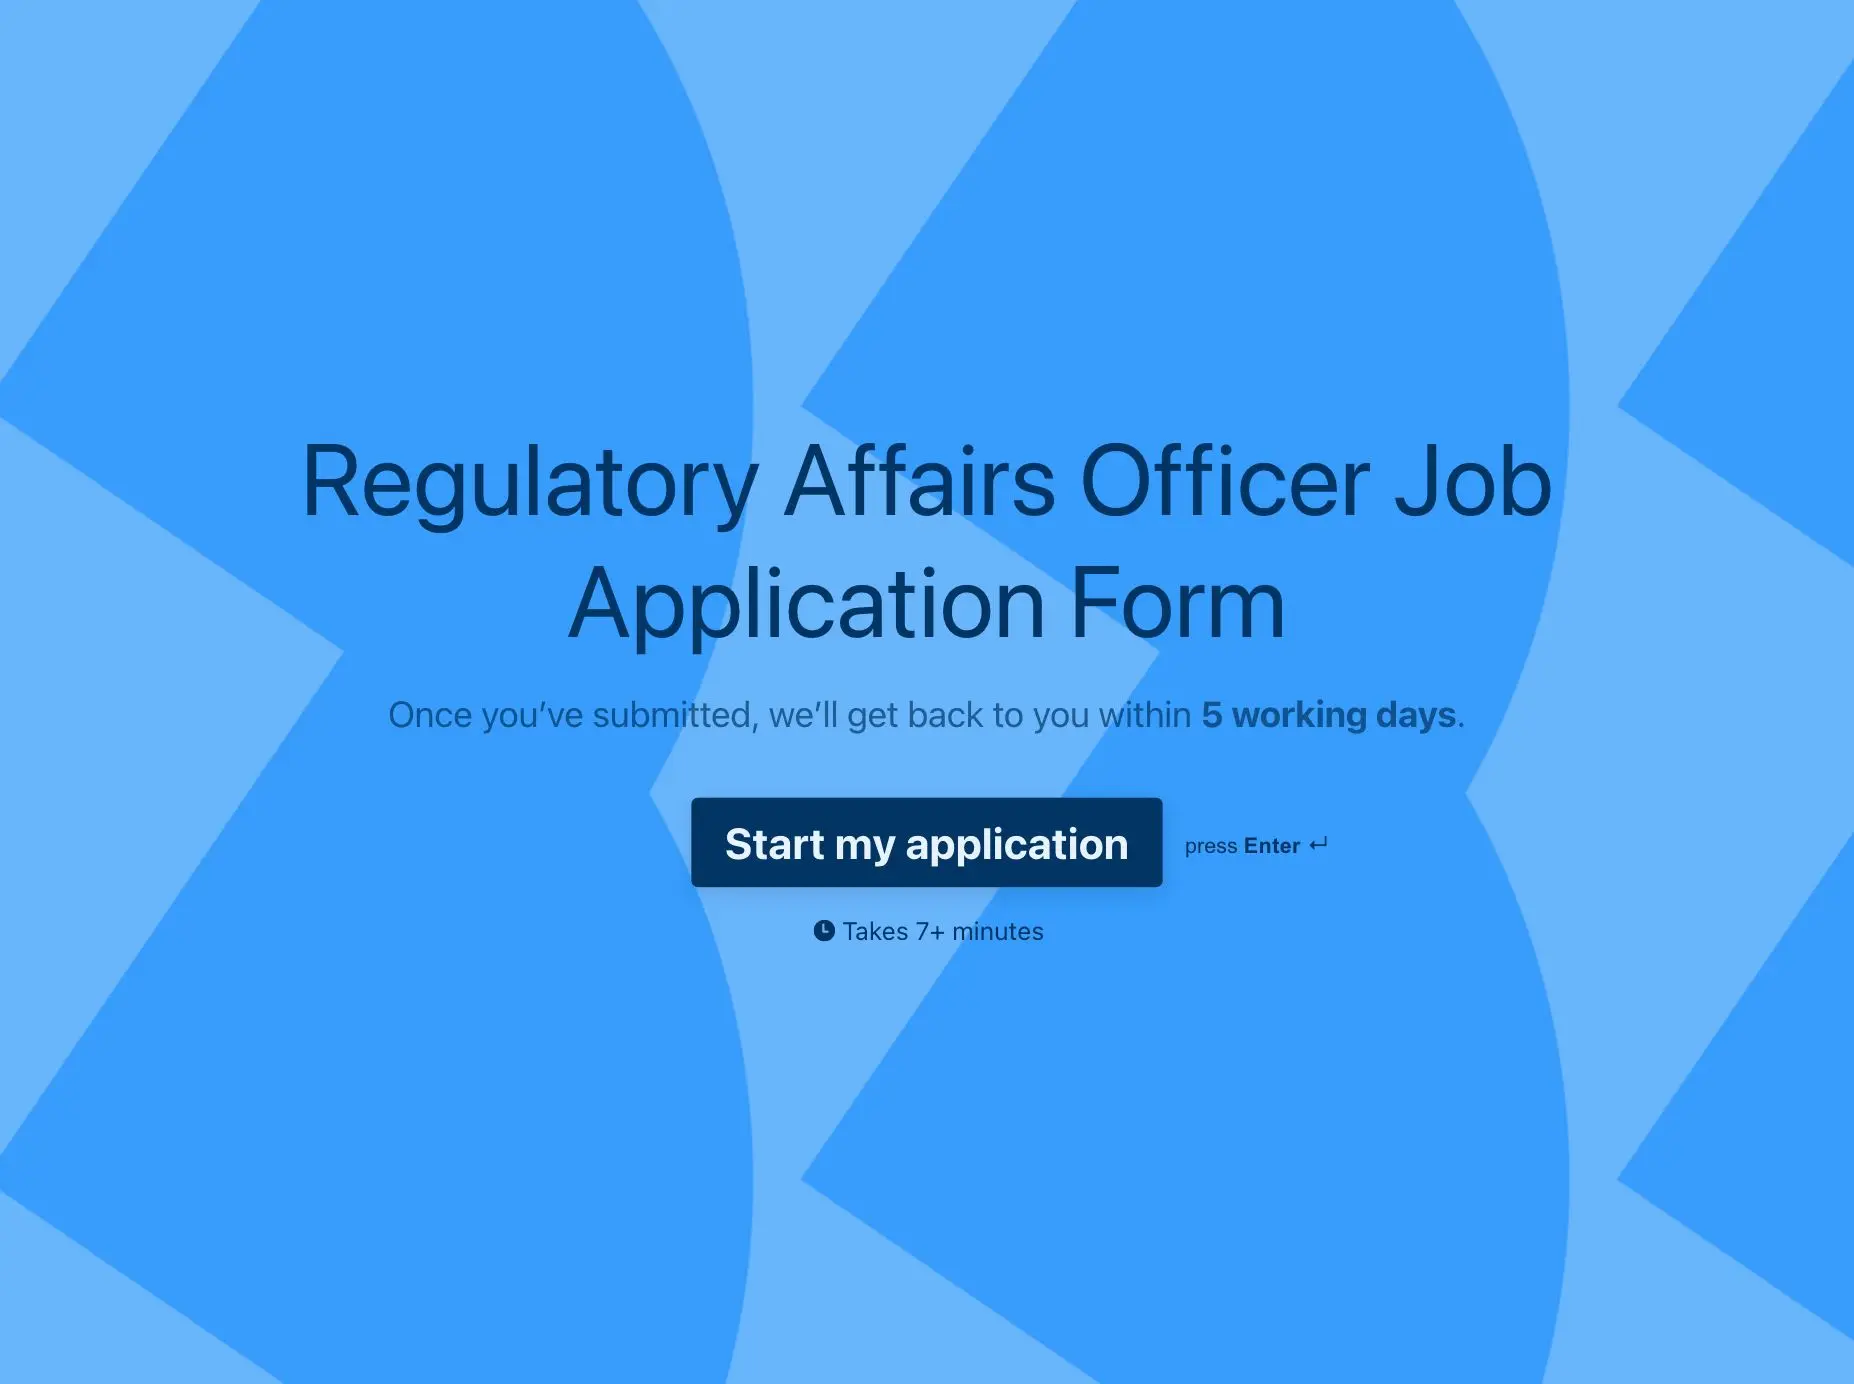 Regulatory Affairs Officer Job Application Form Template Hero